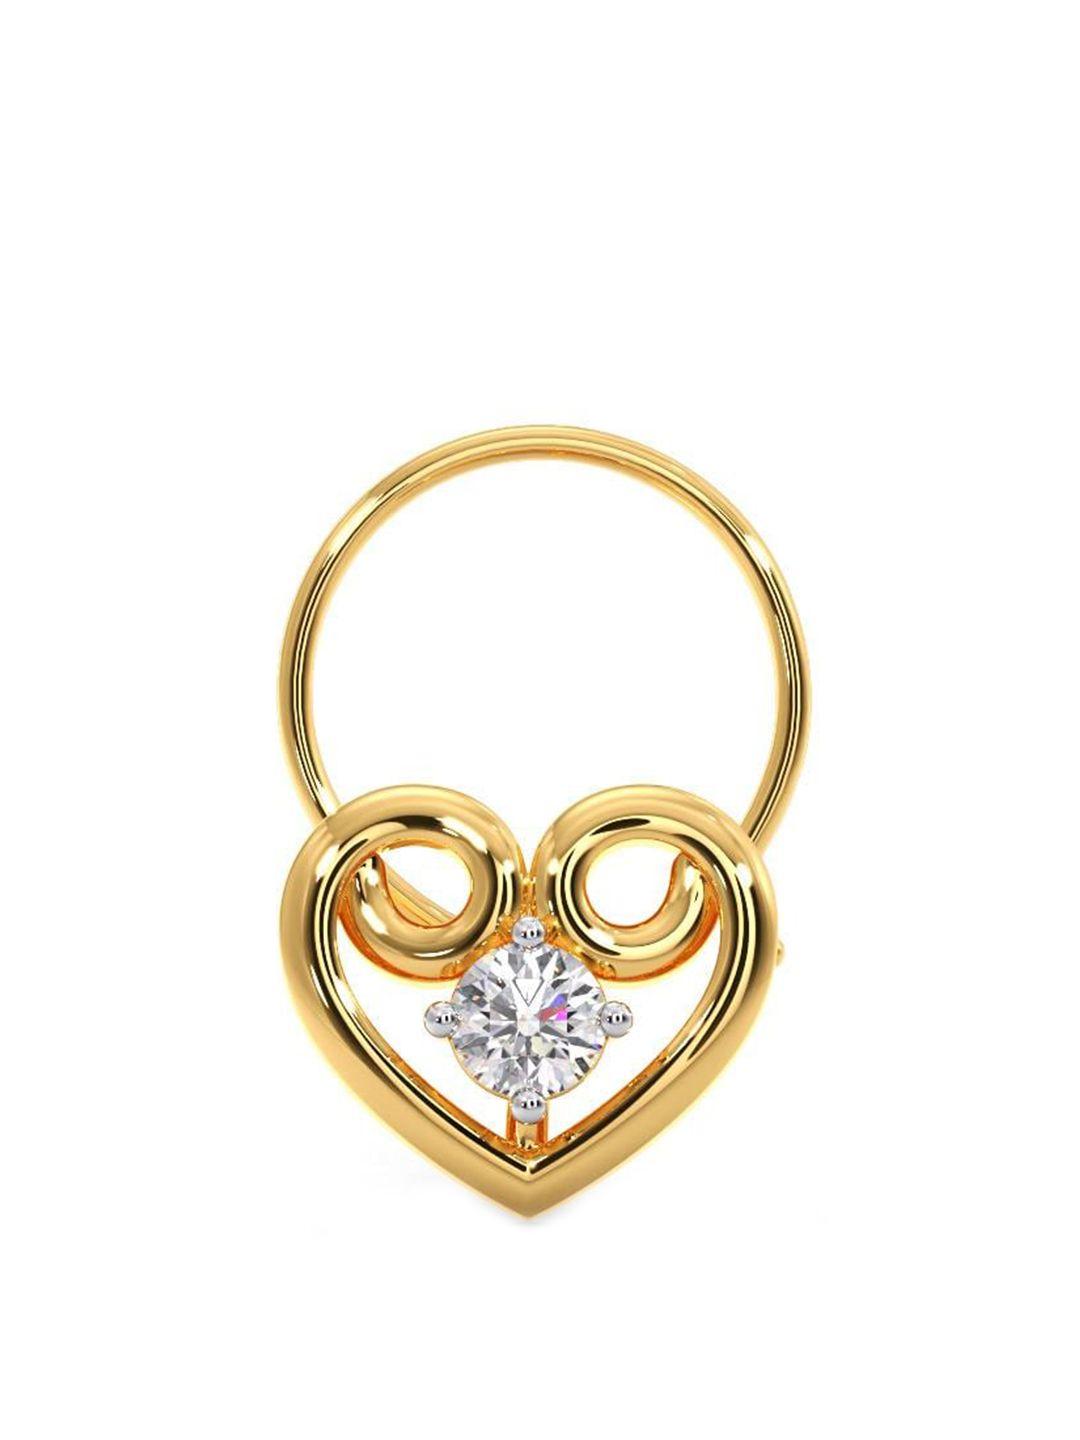 candere a kalyan jewellers company 18k yellow gold bis hallmark diamond nosepin